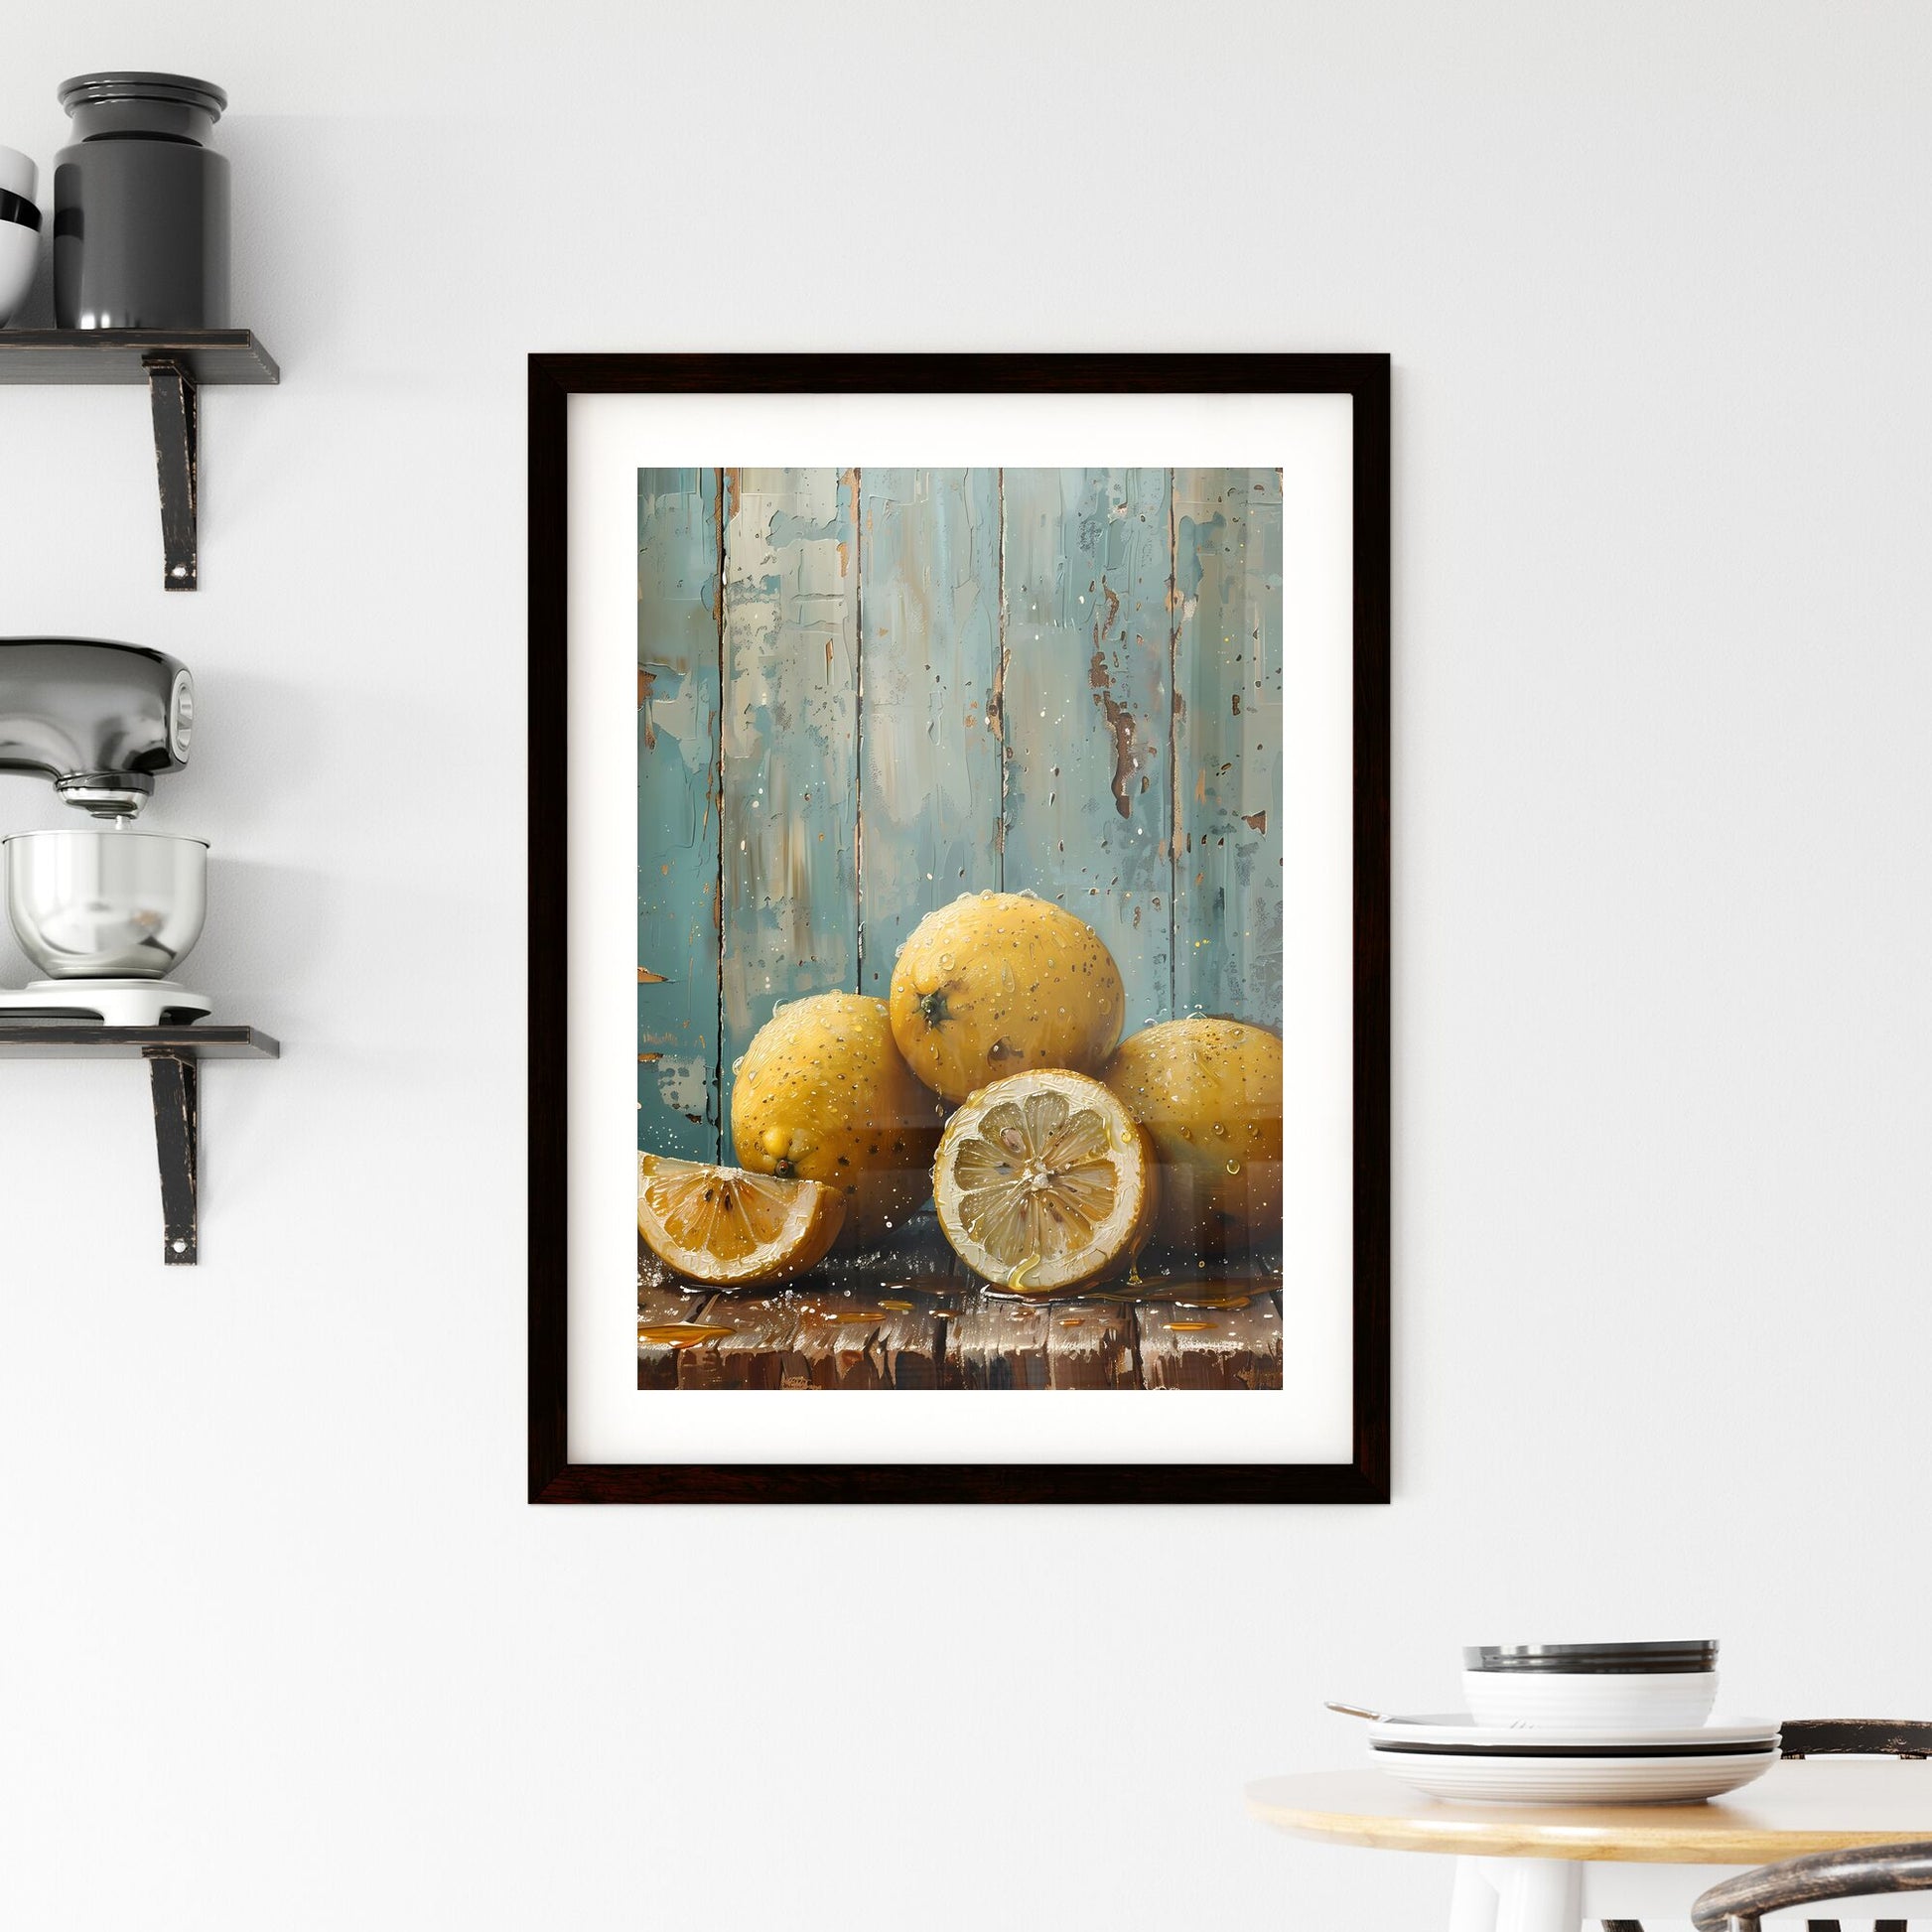 Vintage Oil Painting: Moody Still Life with Lemons on Oak Table, Art Print, Home Decor, Wall Art Default Title